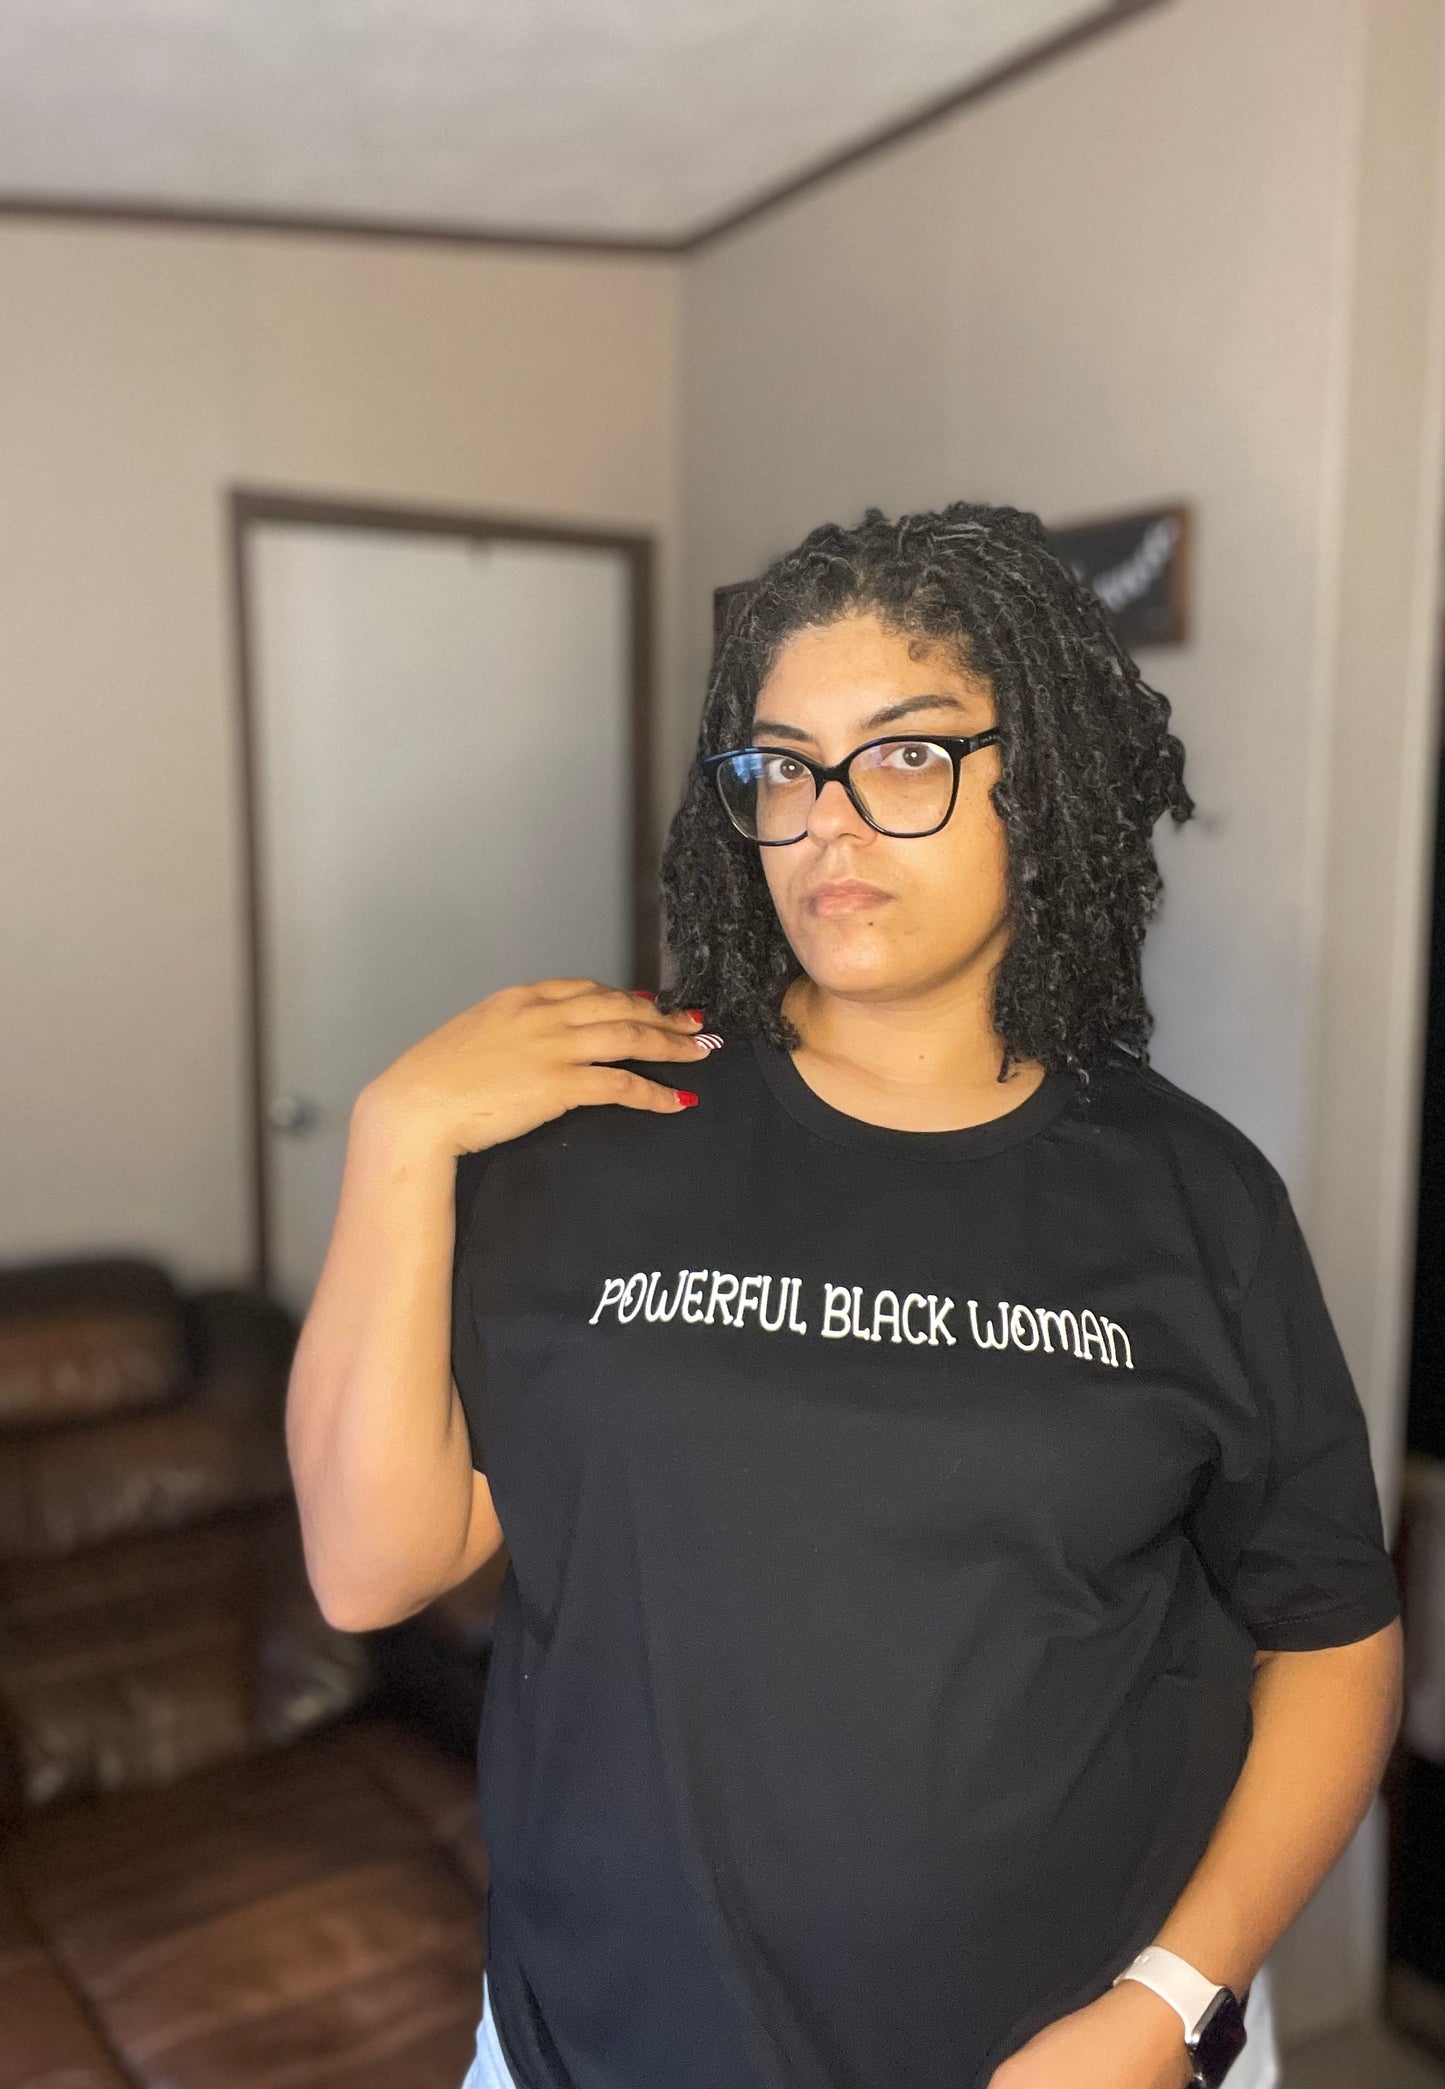 Powerful Black Women Tee